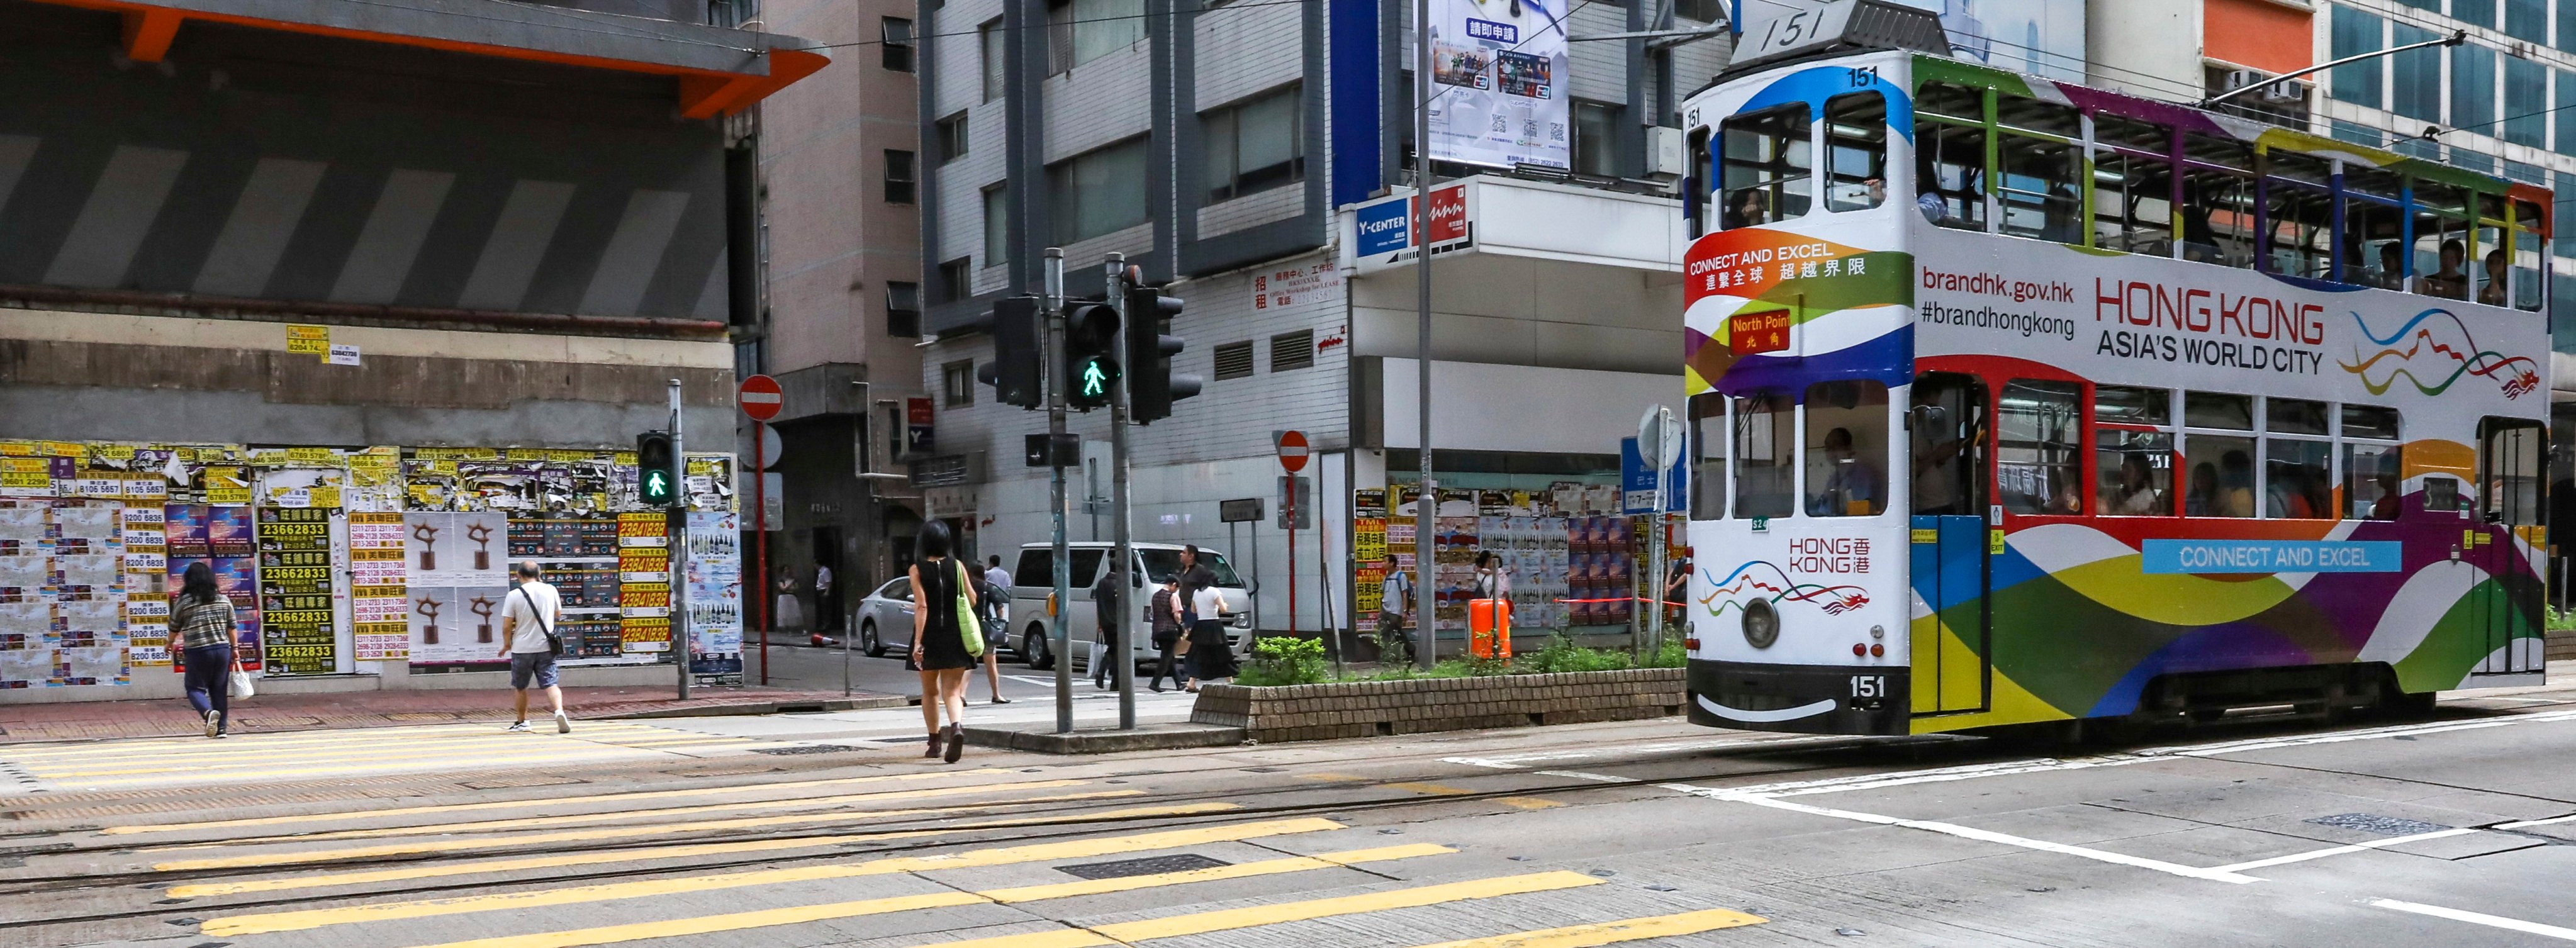 A tram bears the logo “Hong Kong - Asia’s World City”. Photo: SCMP / Nora Tam